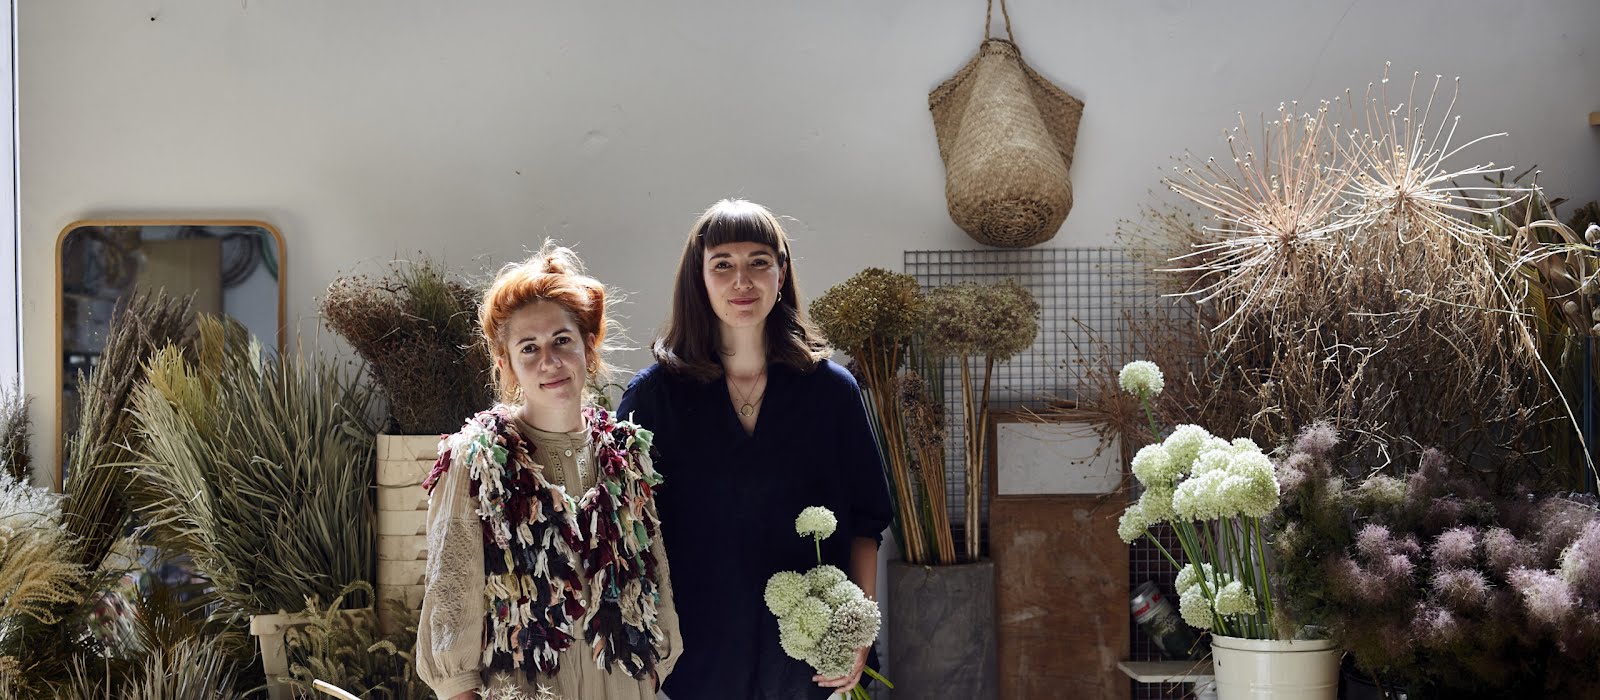 Meet two Irish creatives transforming the London flower scene